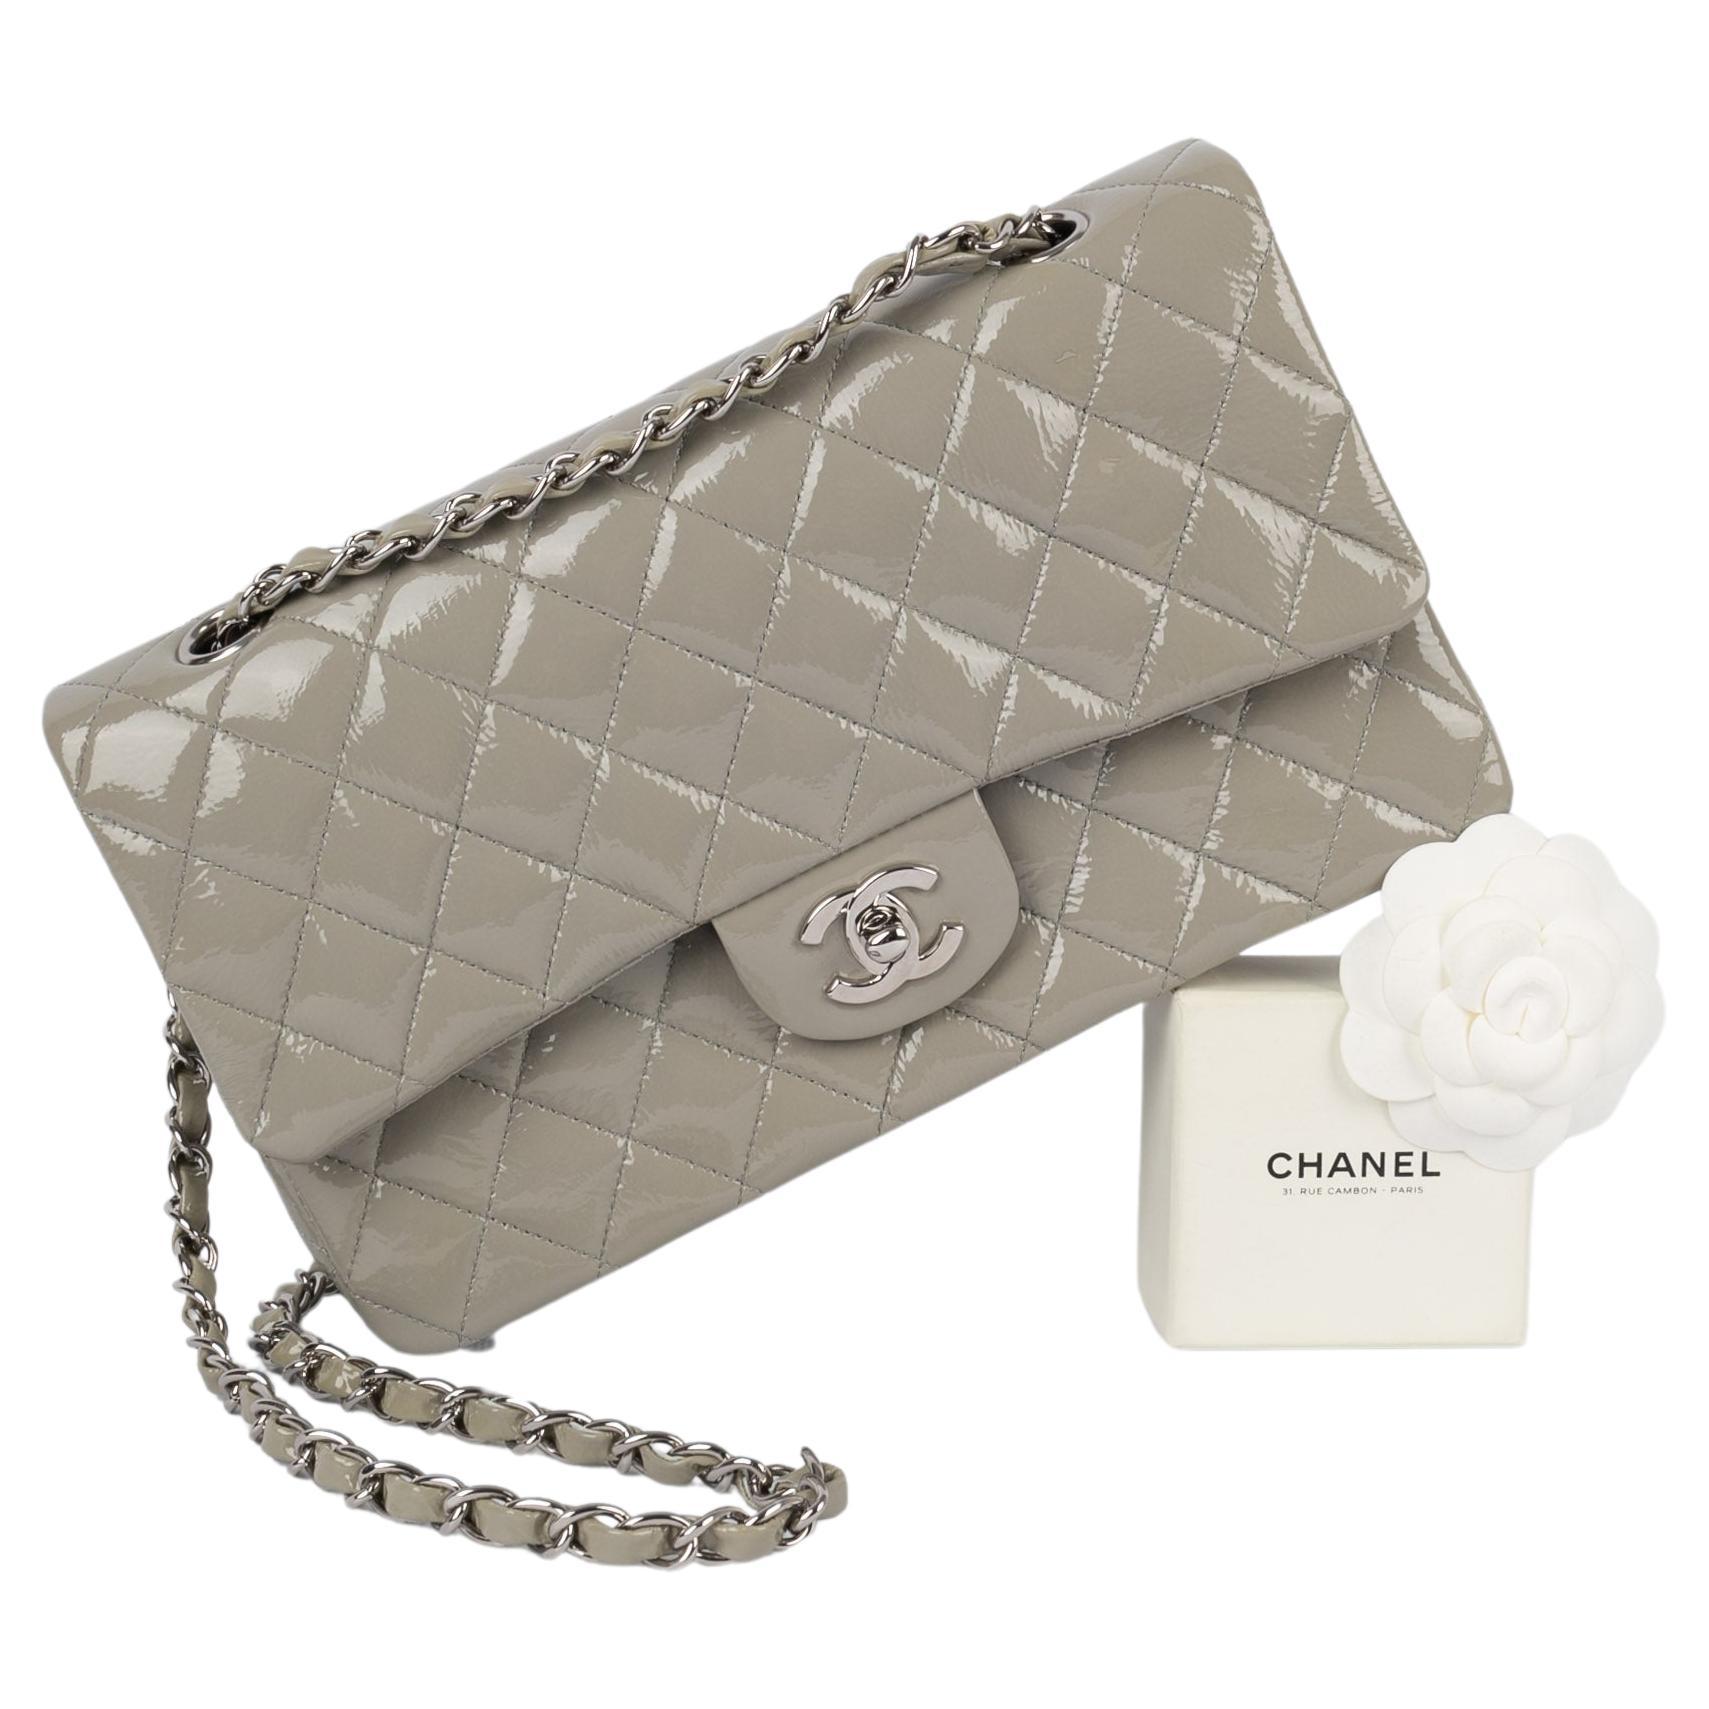 Chanel bag 2008/2009 For Sale